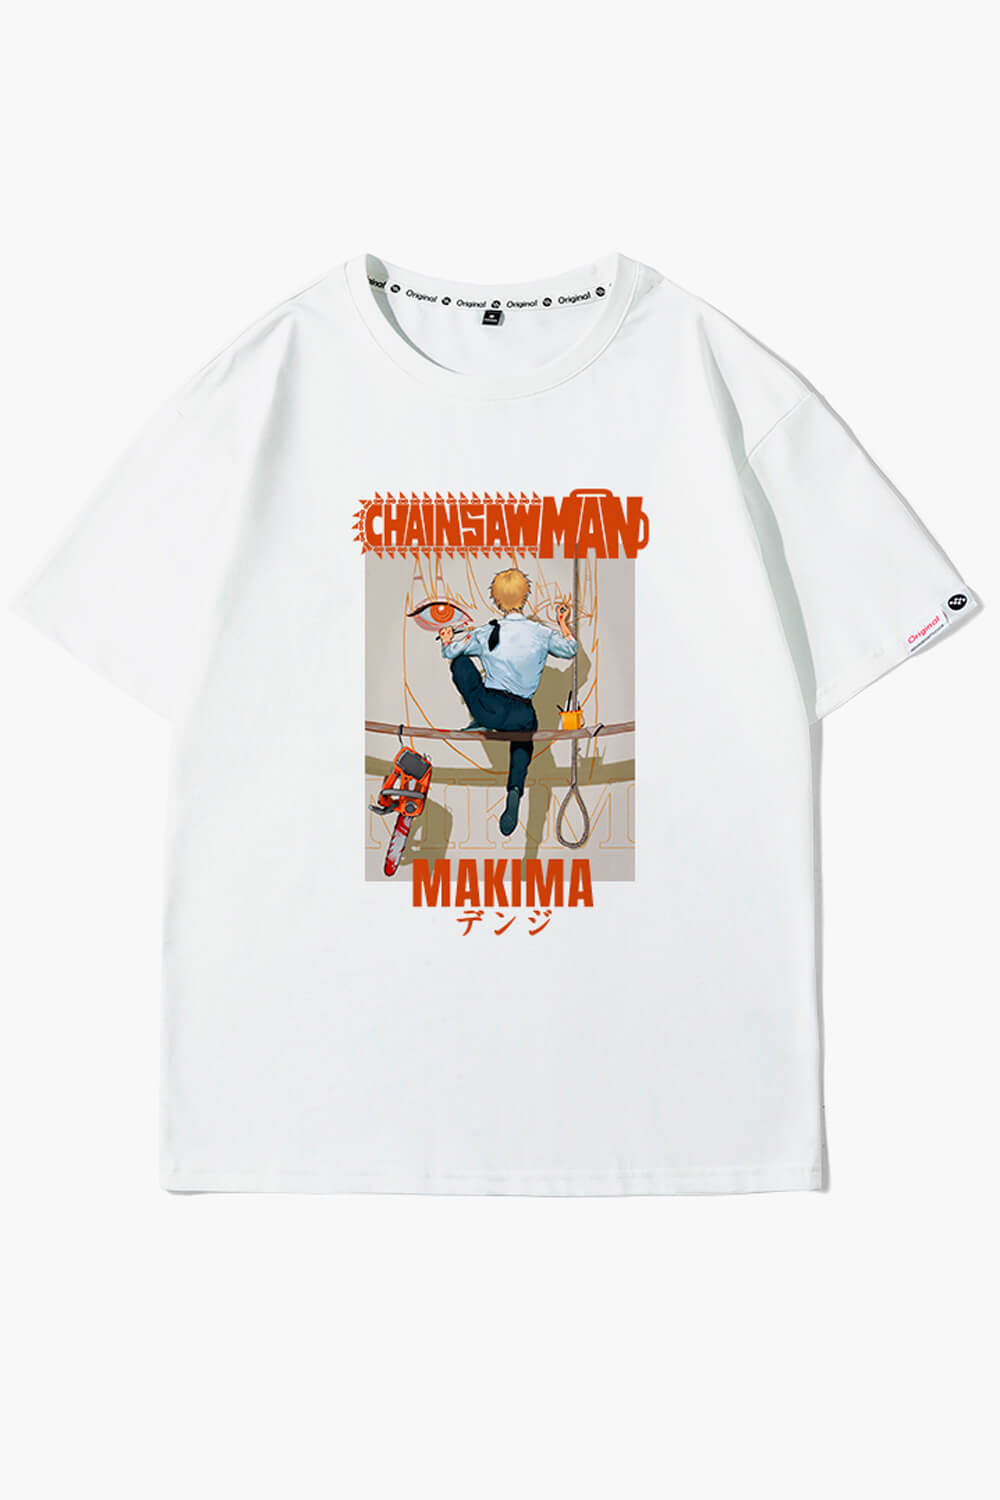 Denji Painting Makima Face T-Shirt Chainsaw Man